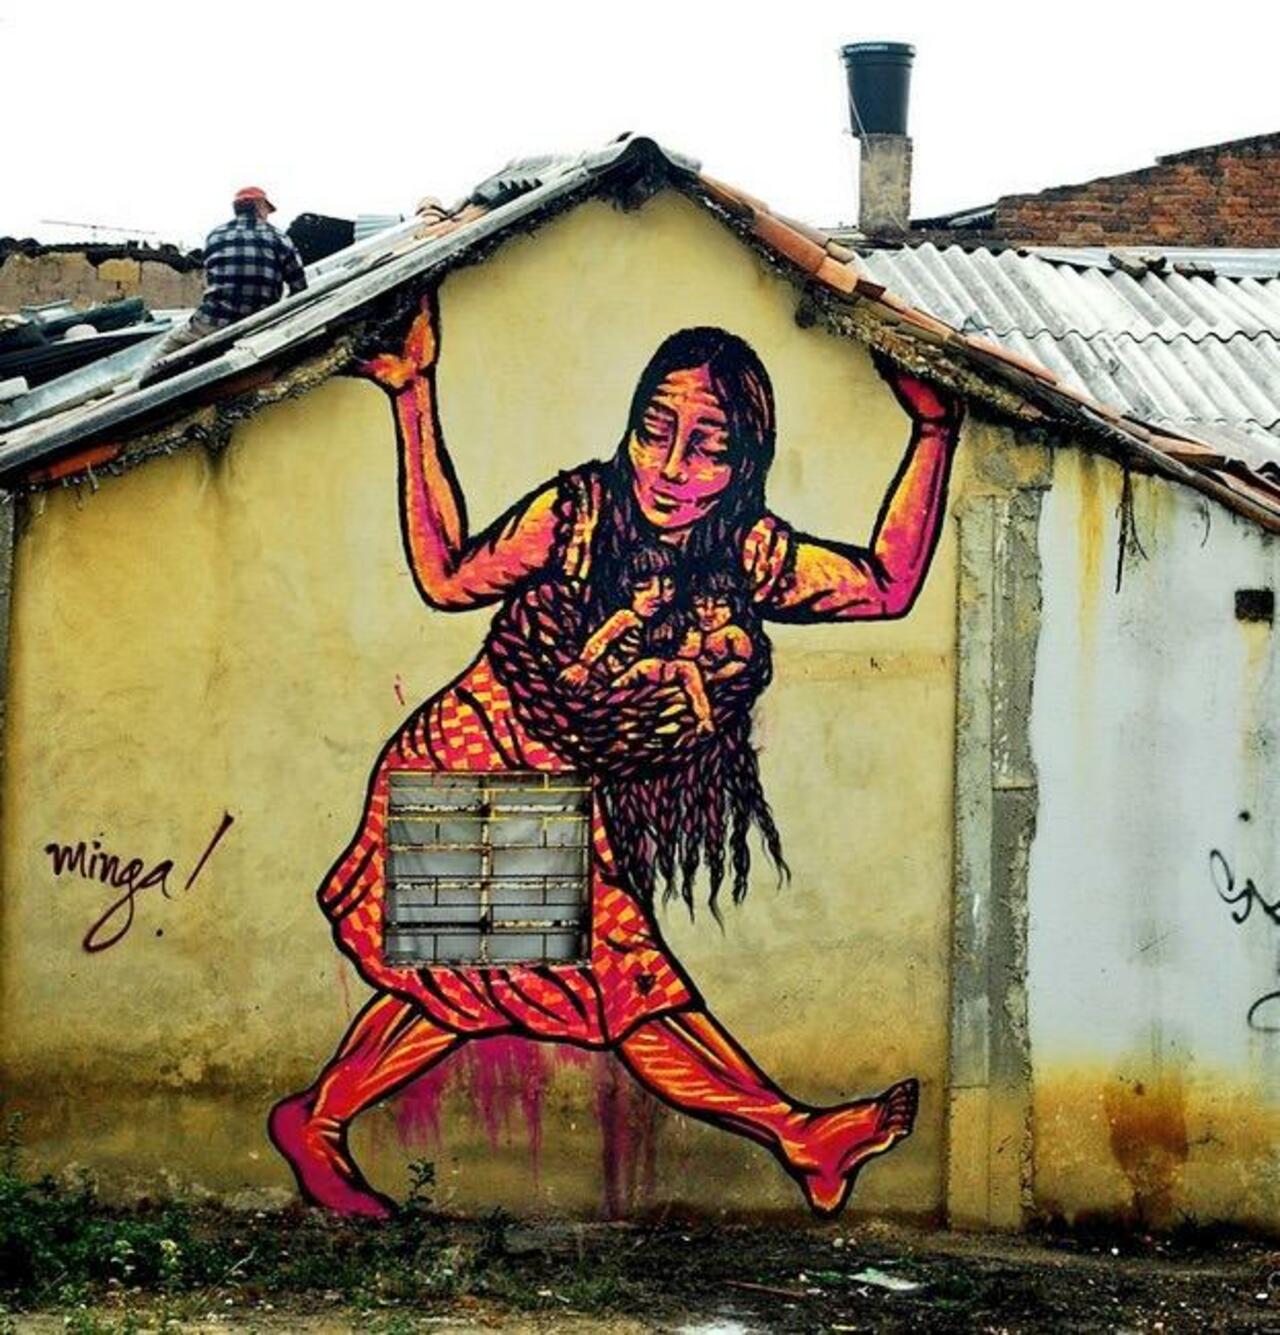 “@Pitchuskita: BASTARDILLA
Colombia
#streetart #art #graffiti #mural http://t.co/kobYBqI0Sd”